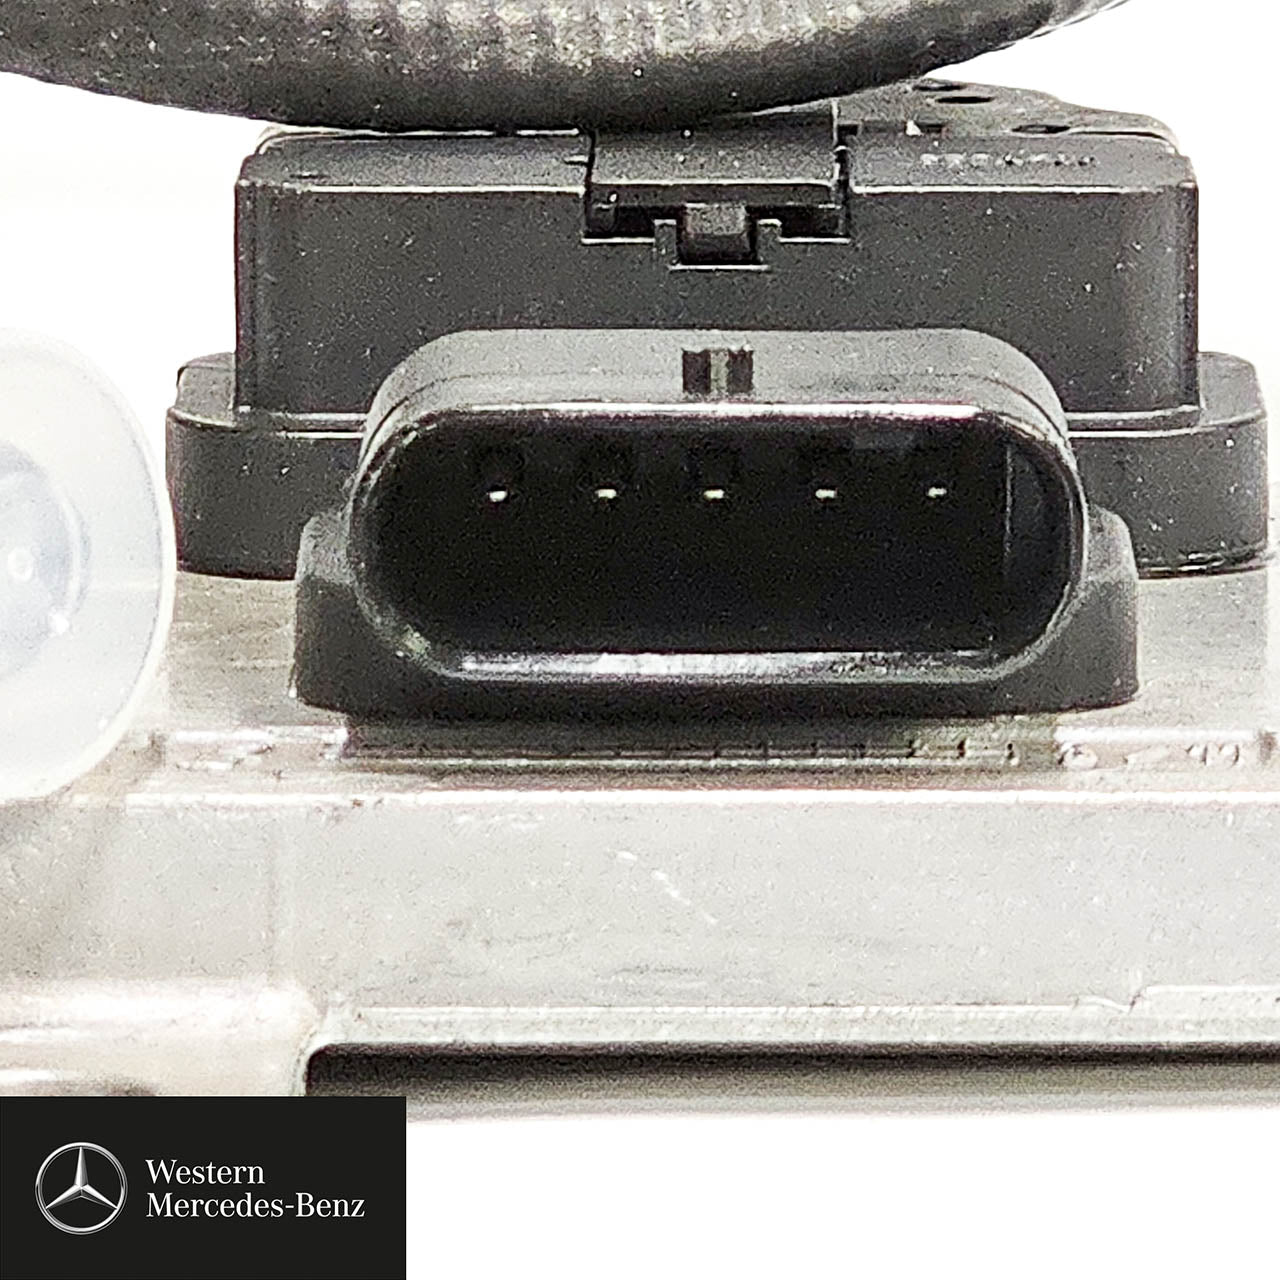 Genuine Mercedes-Benz NOx sensor A000905851187 OM651 diesel engine